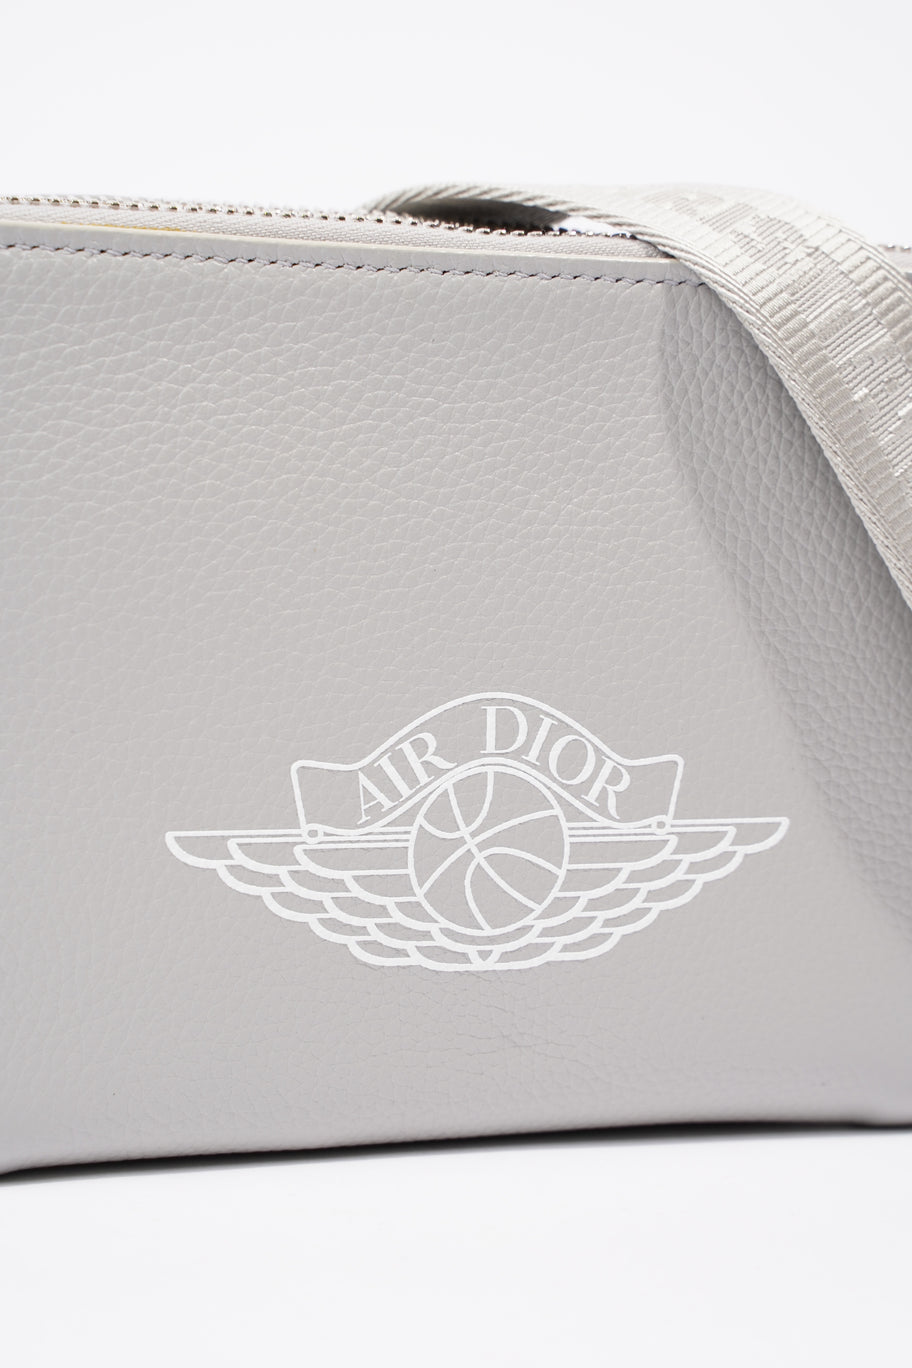 Jordan X Dior Wings Grey Leather Image 3